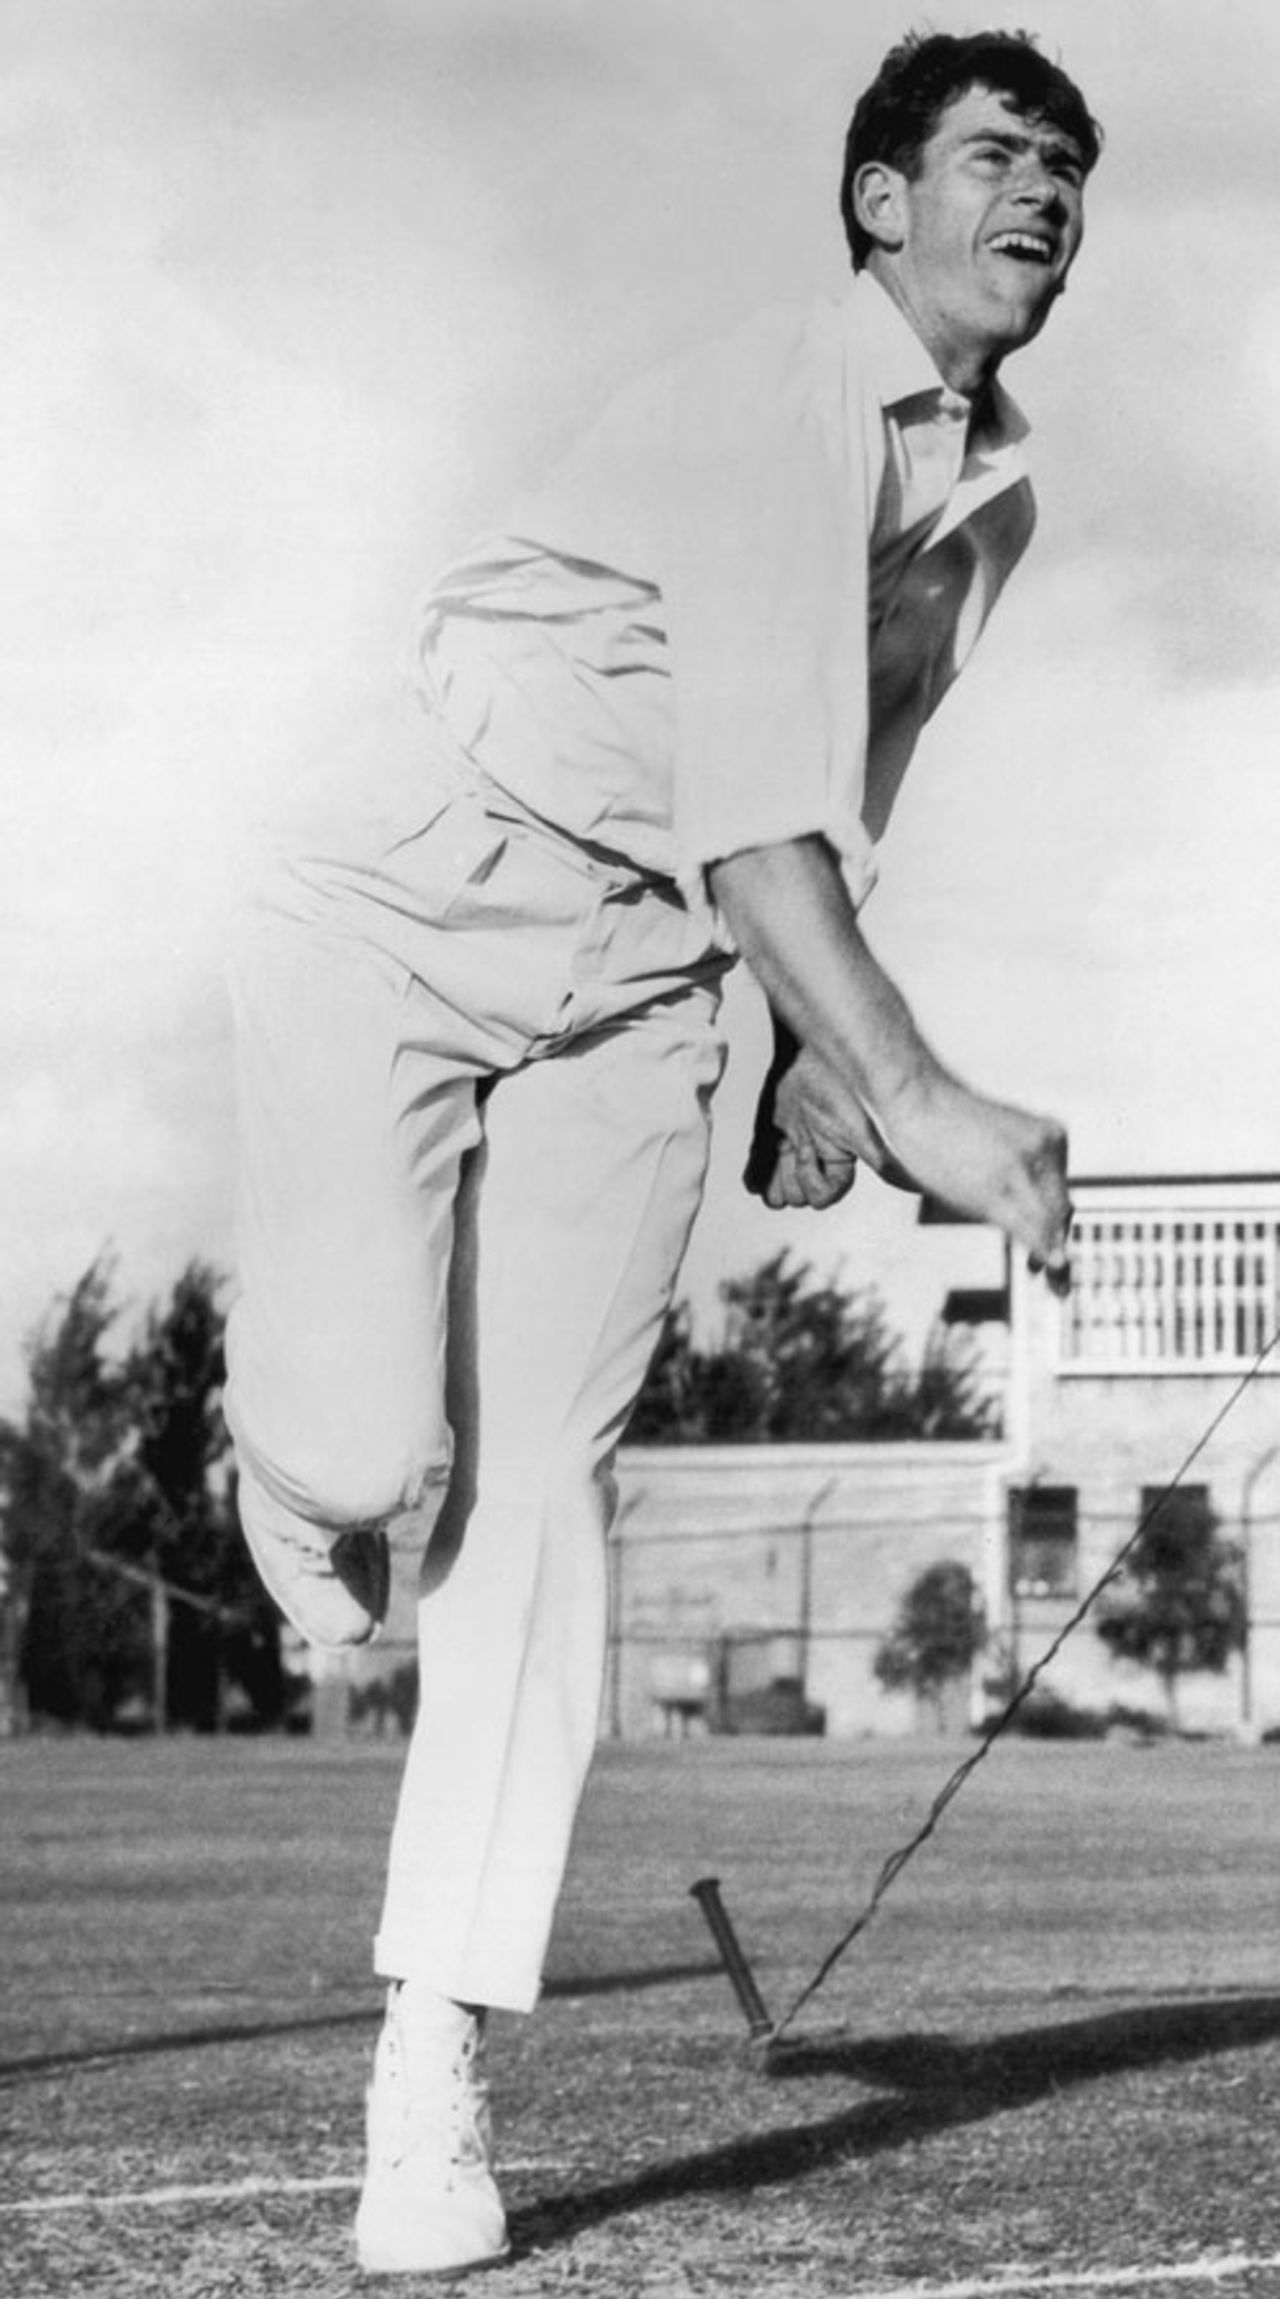 Terry Jenner bowls at the nets, November 17. 1970